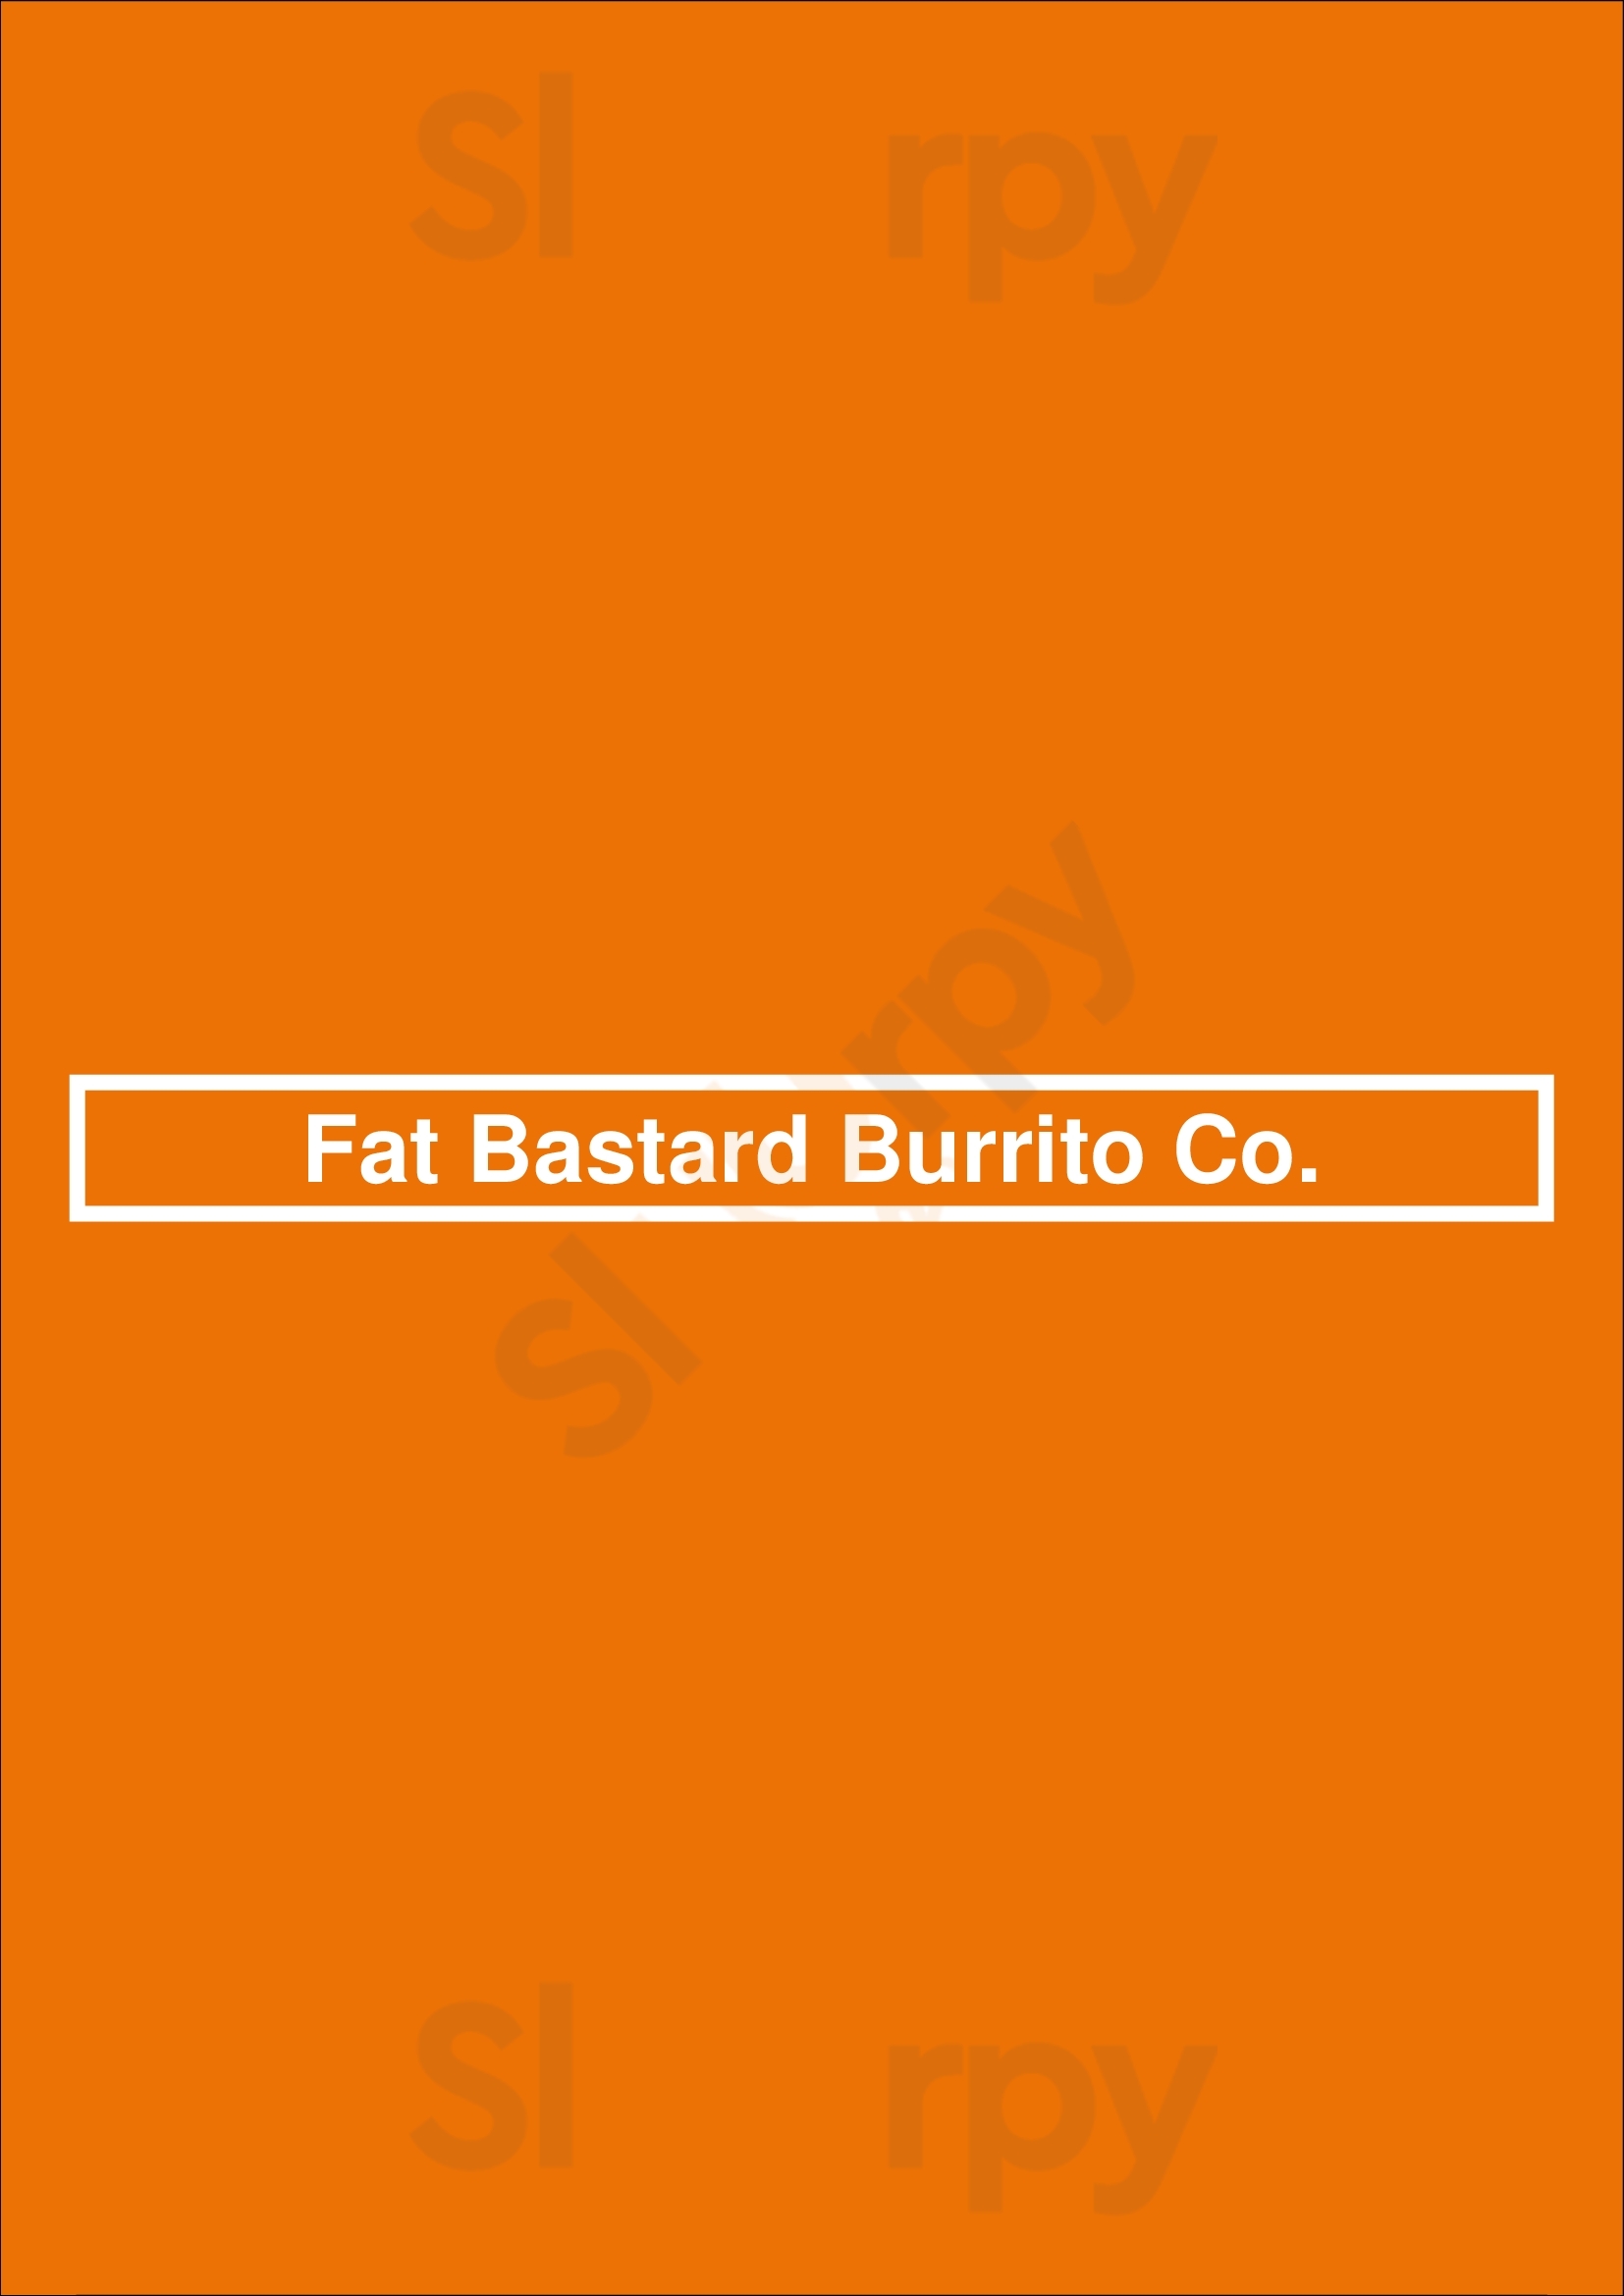 Fat Bastard Burrito Co. Guelph Menu - 1